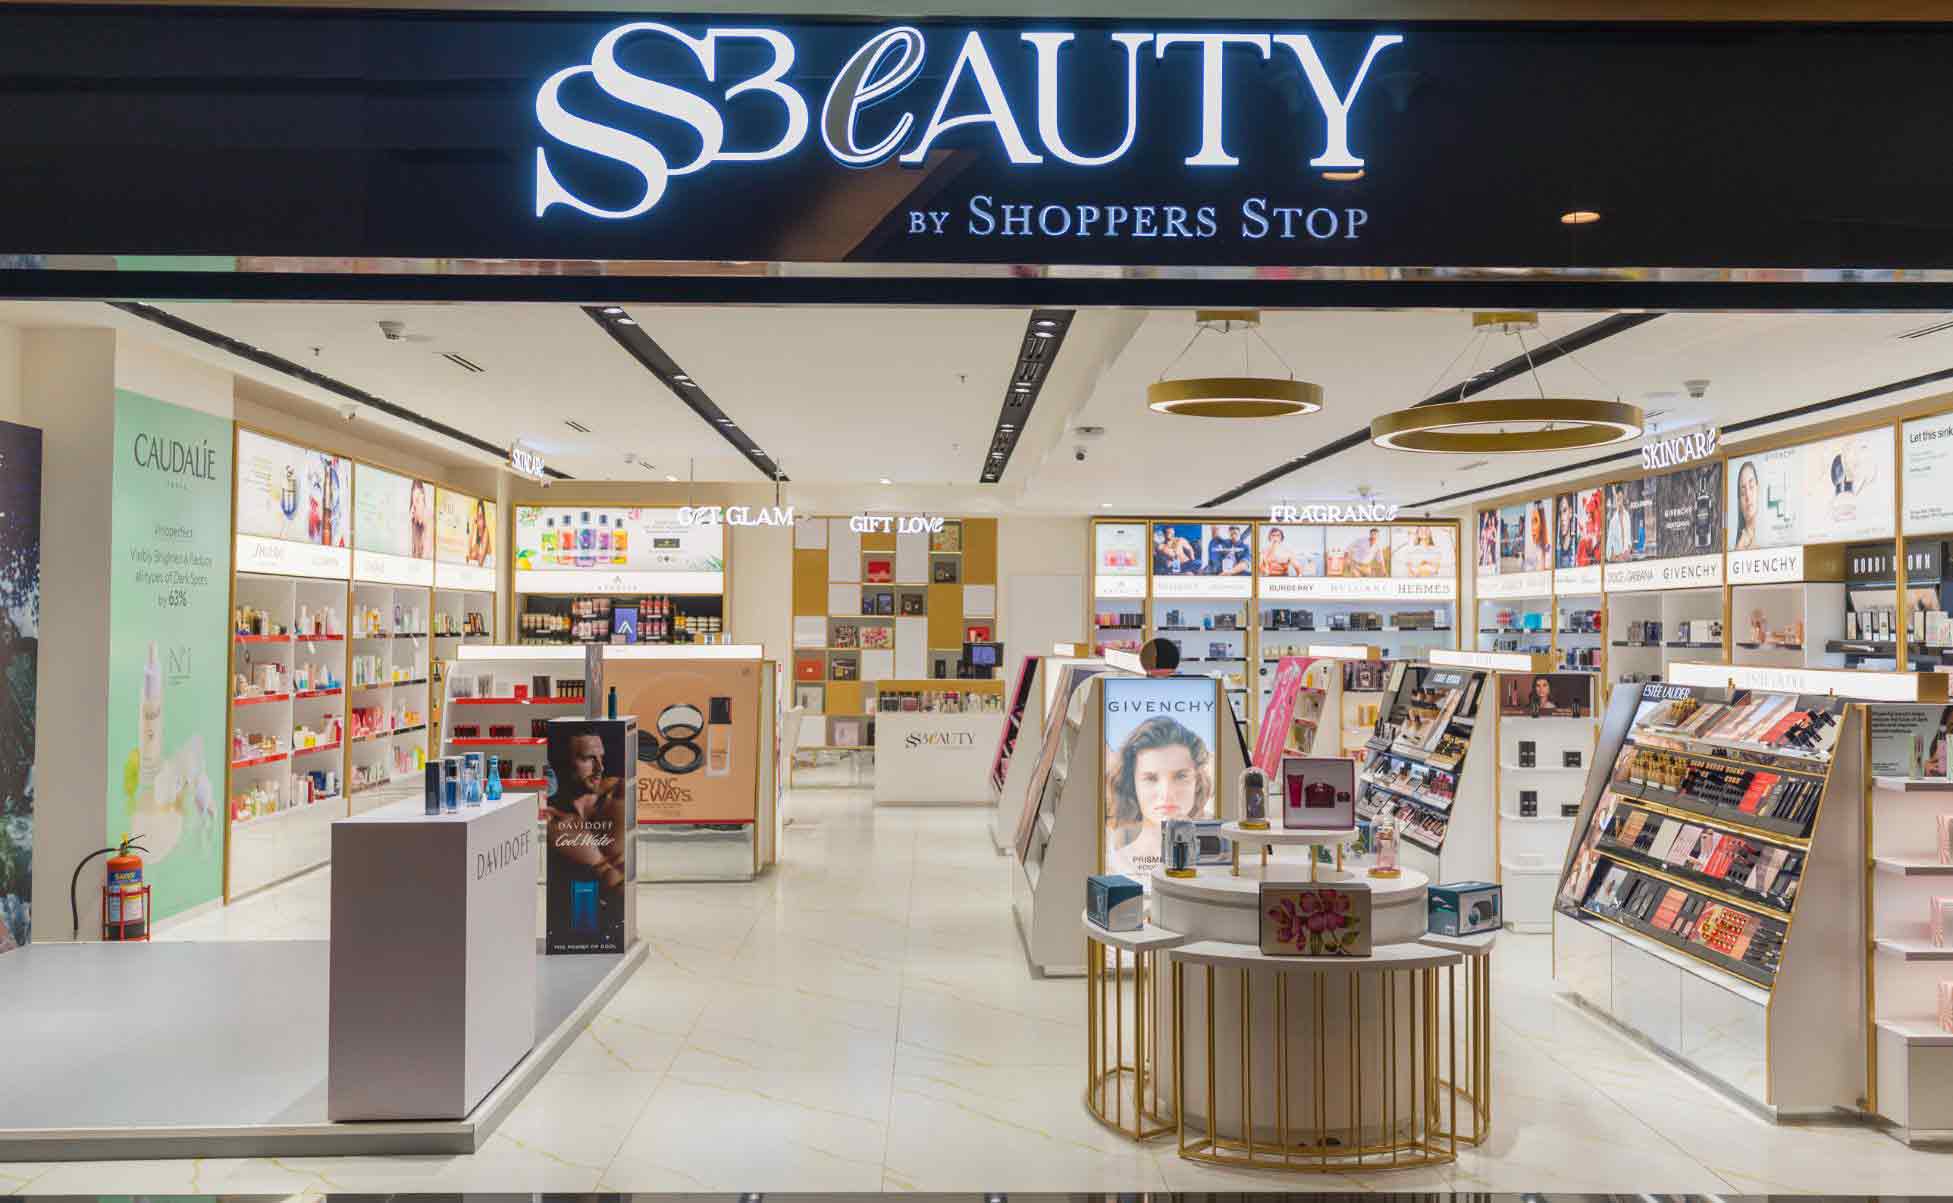 SS beauty store Malad